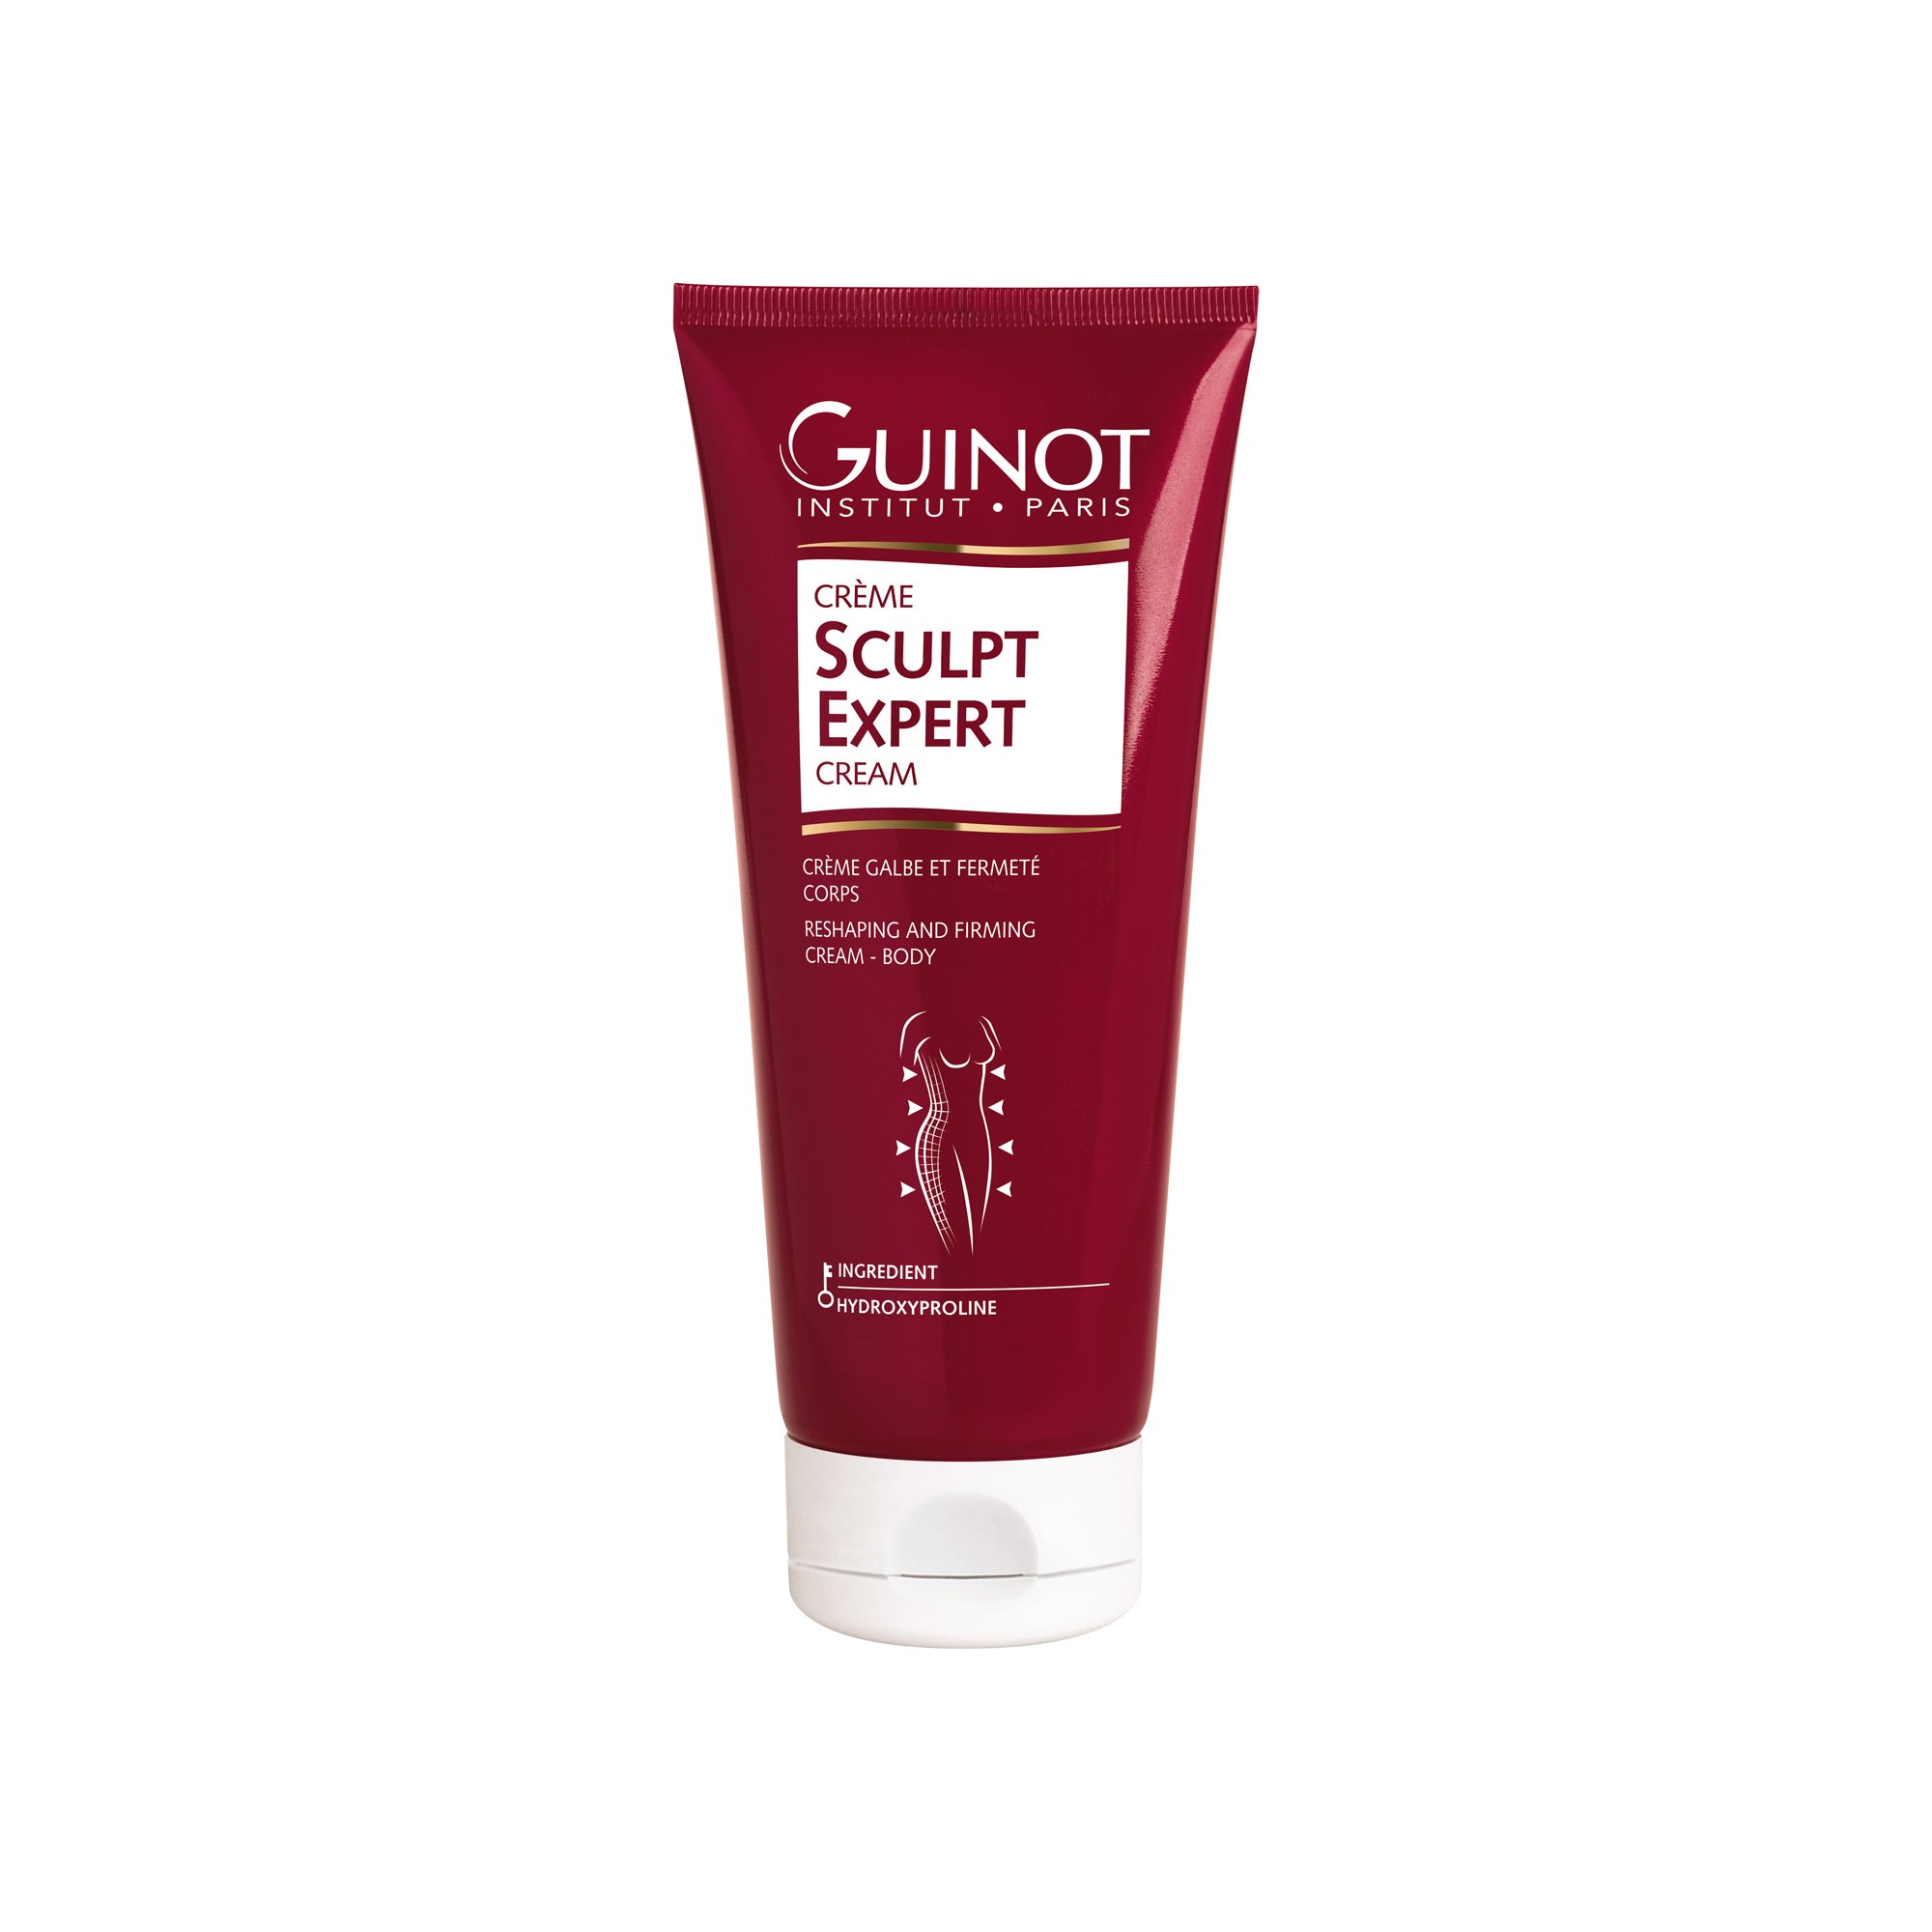 Crème Sculpt Expert (Reshaping and Firming Body Cream) - Guinot